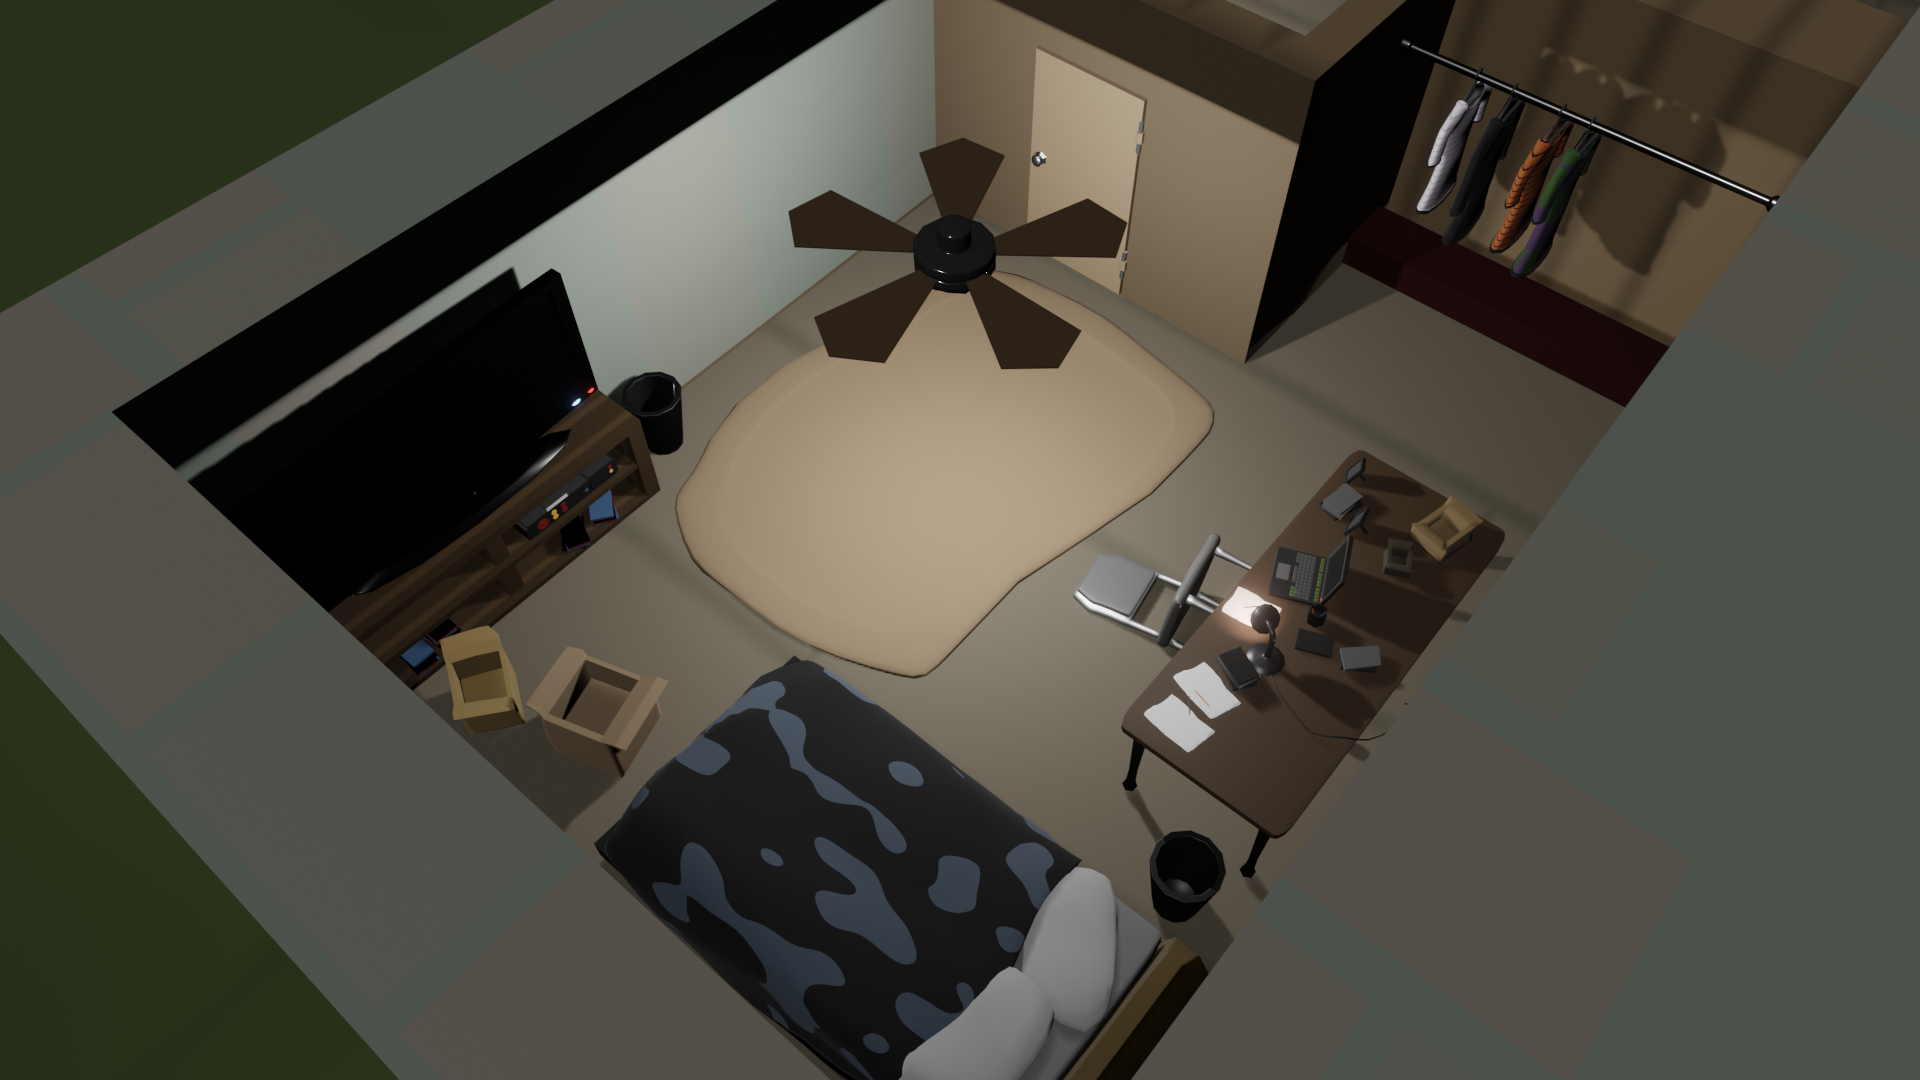 2-Floor Modular/Customizable House preview image 3